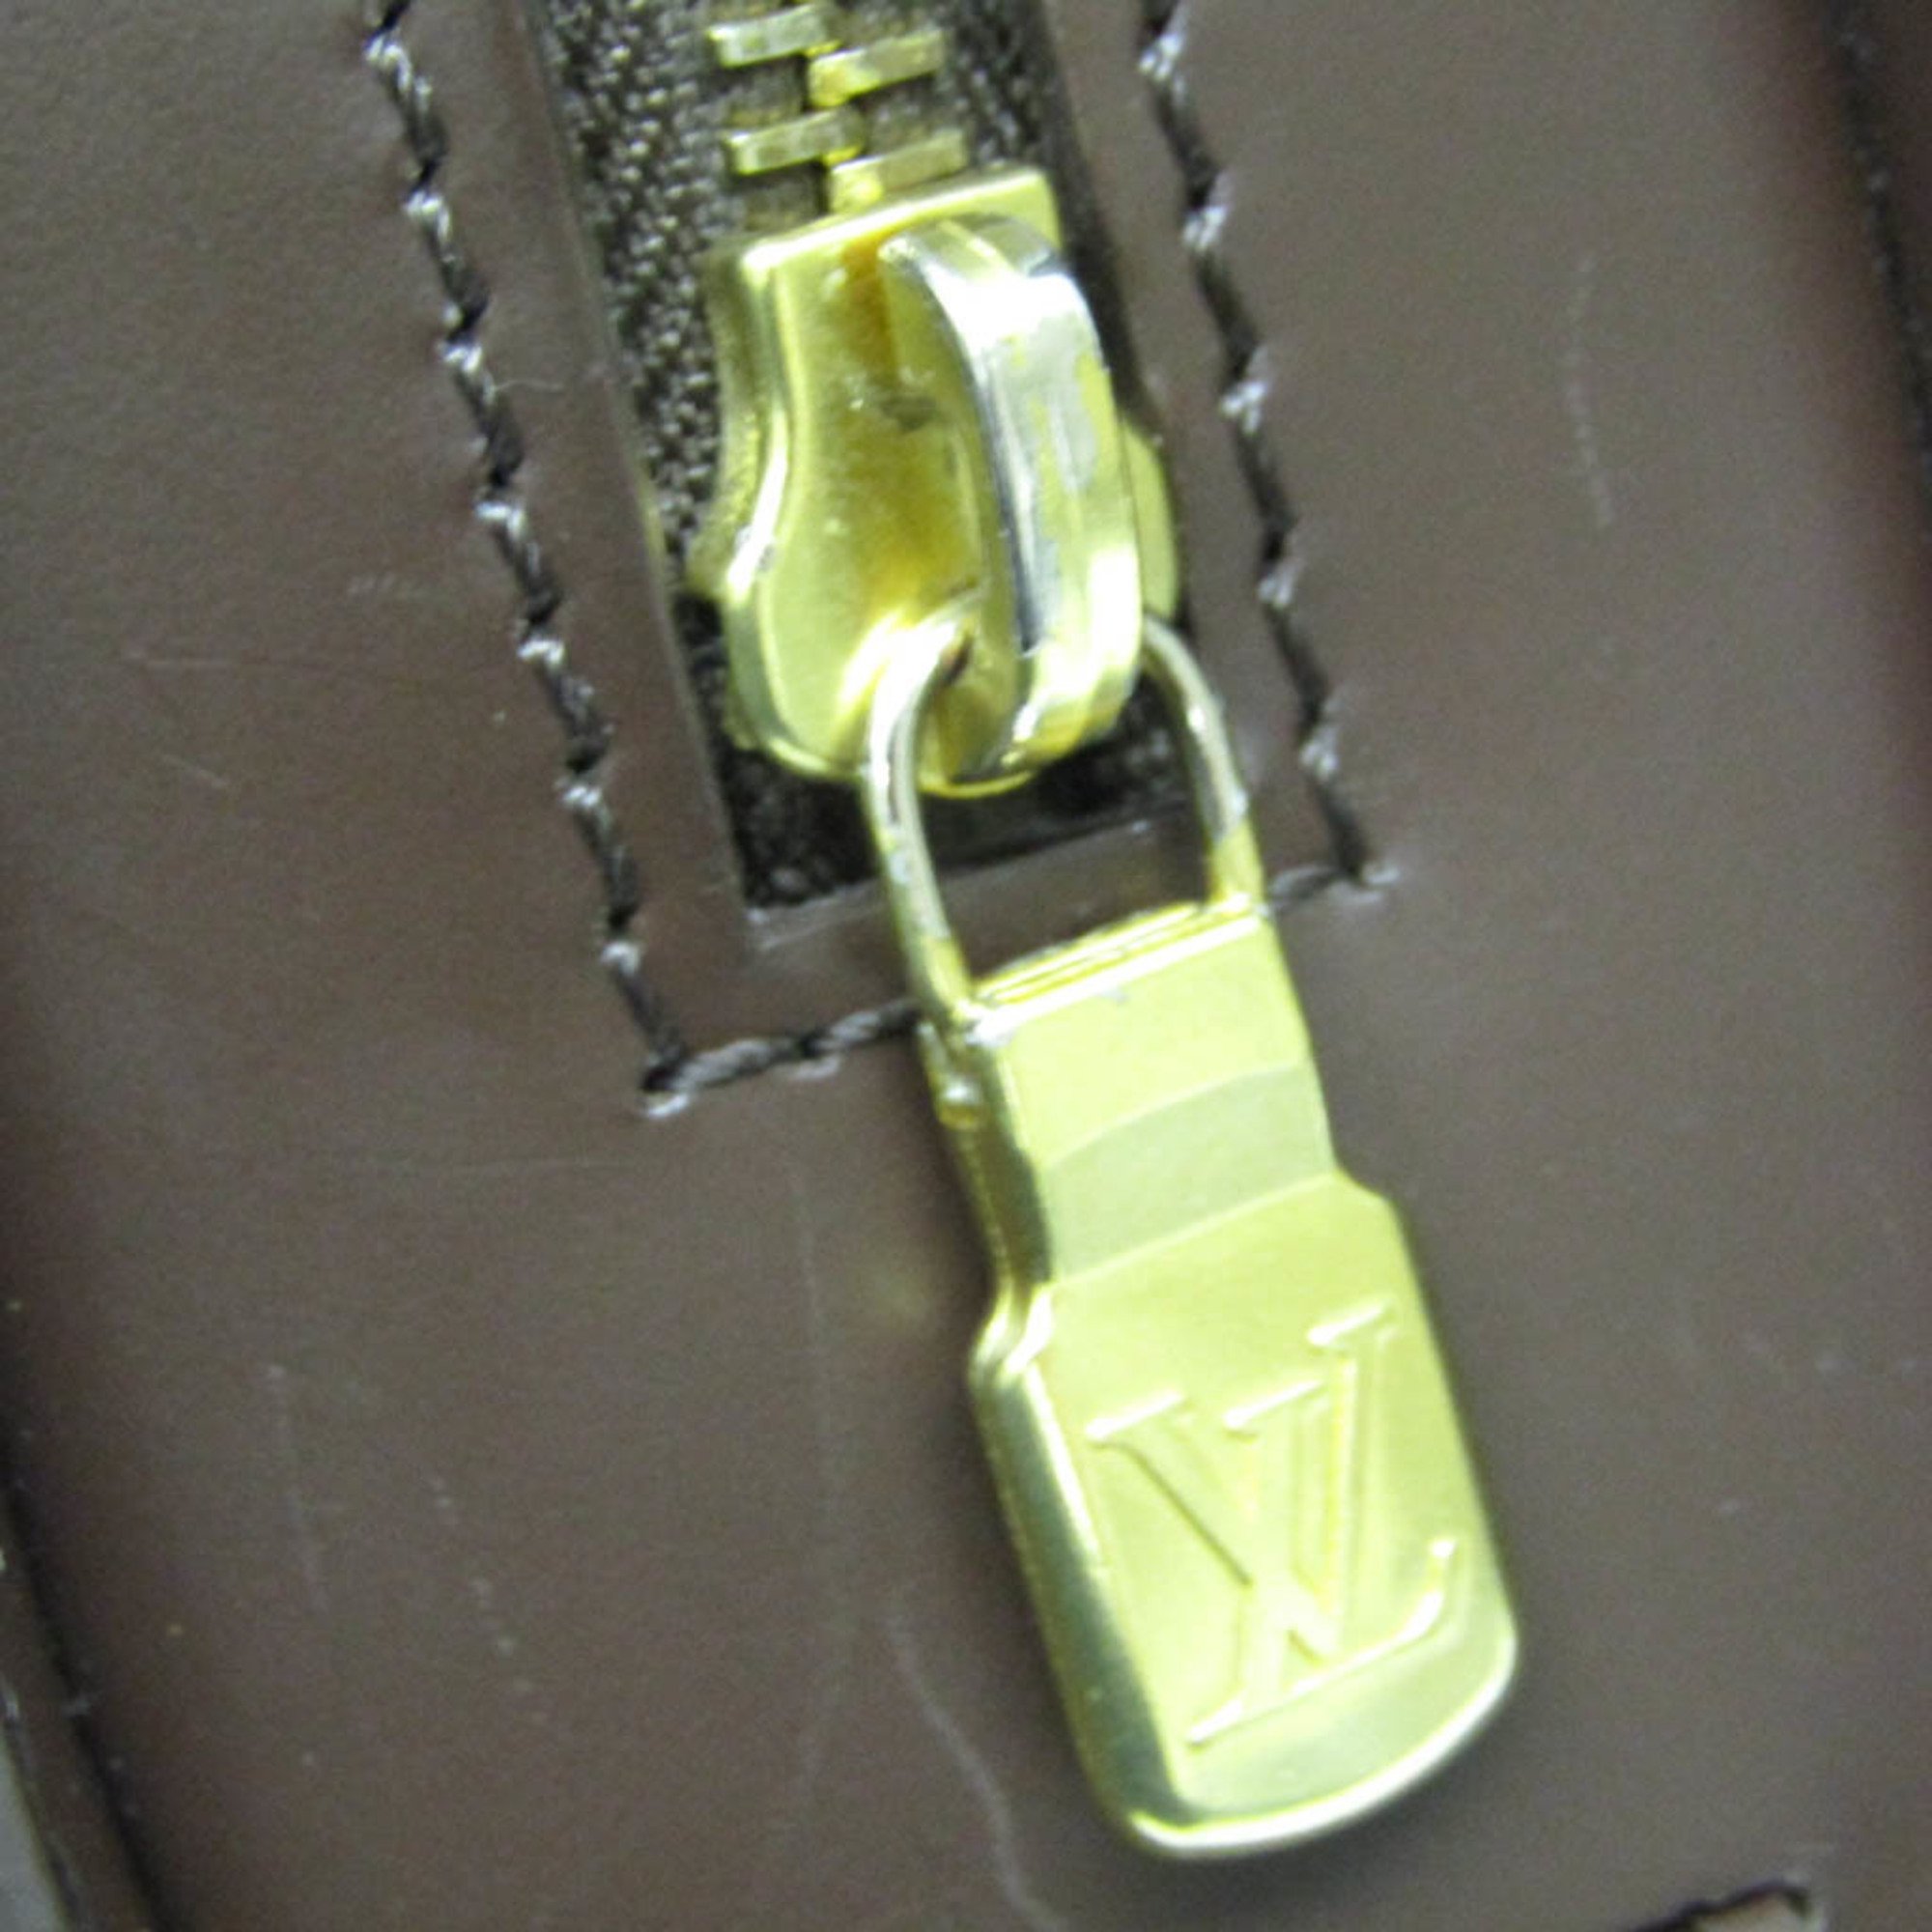 Louis Vuitton Saint Louis N51993 Women's Clutch Bag Ebene